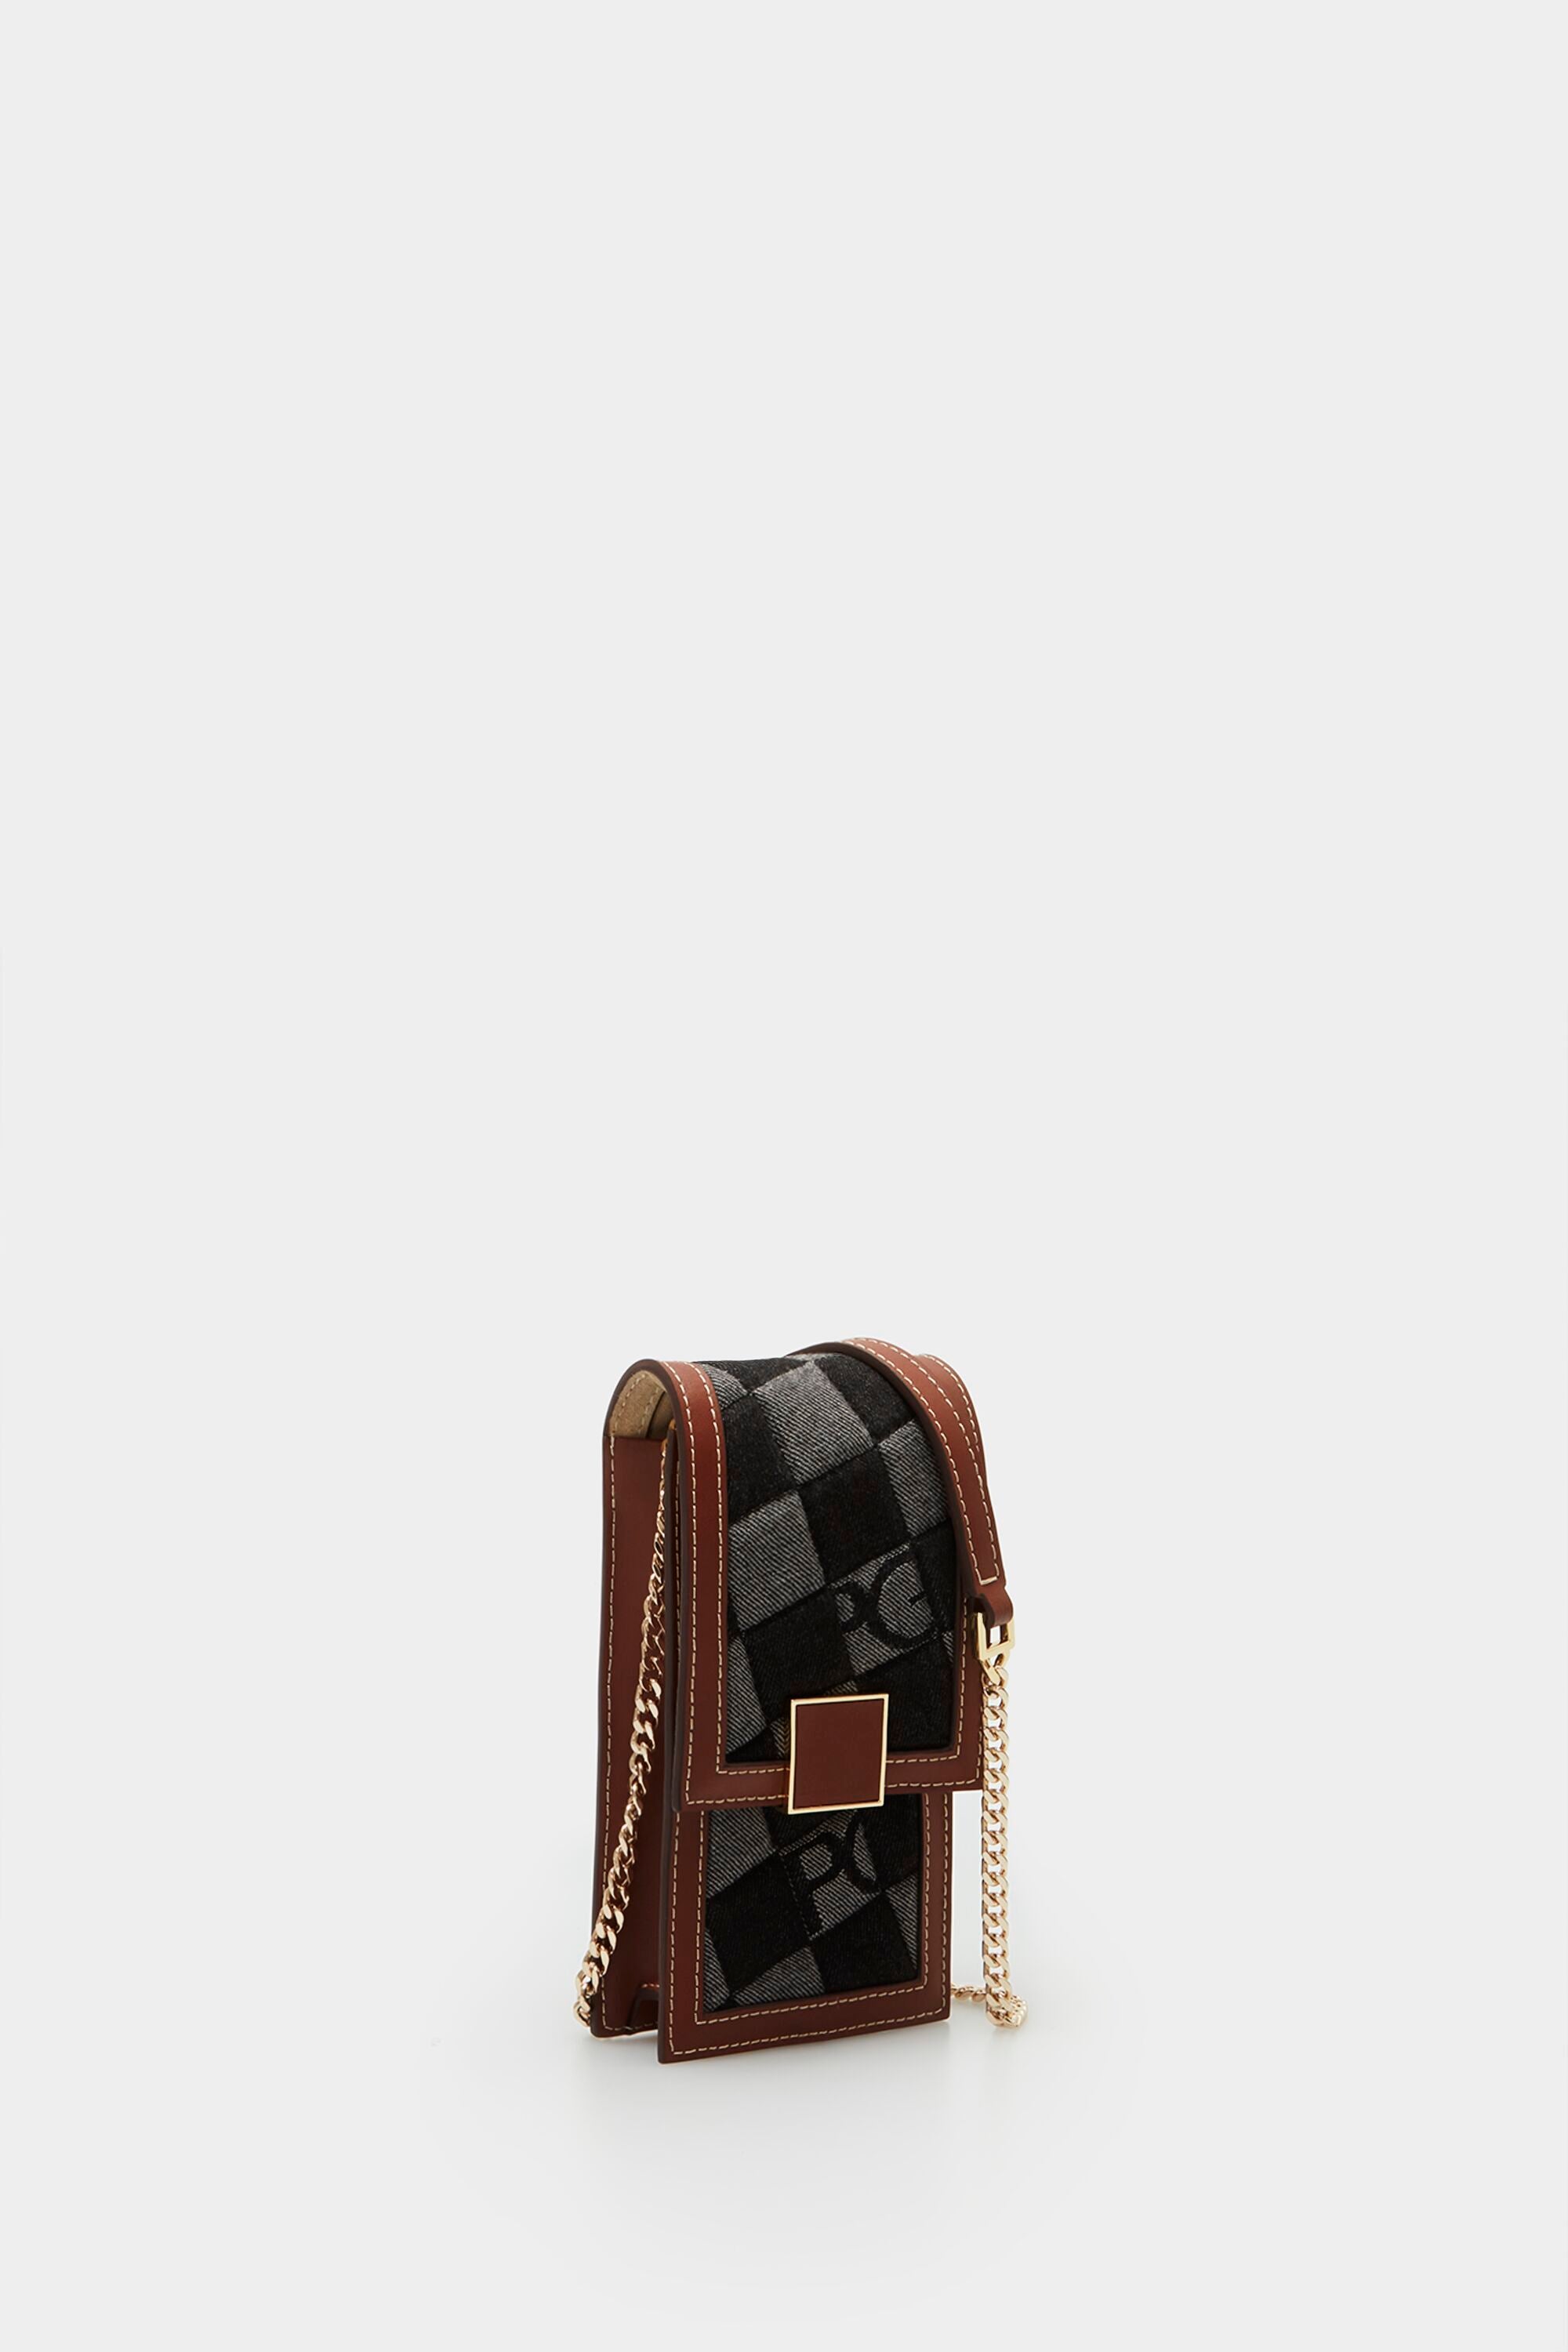 Shop Louis Vuitton MONOGRAM Dauphine micro bag for earphones